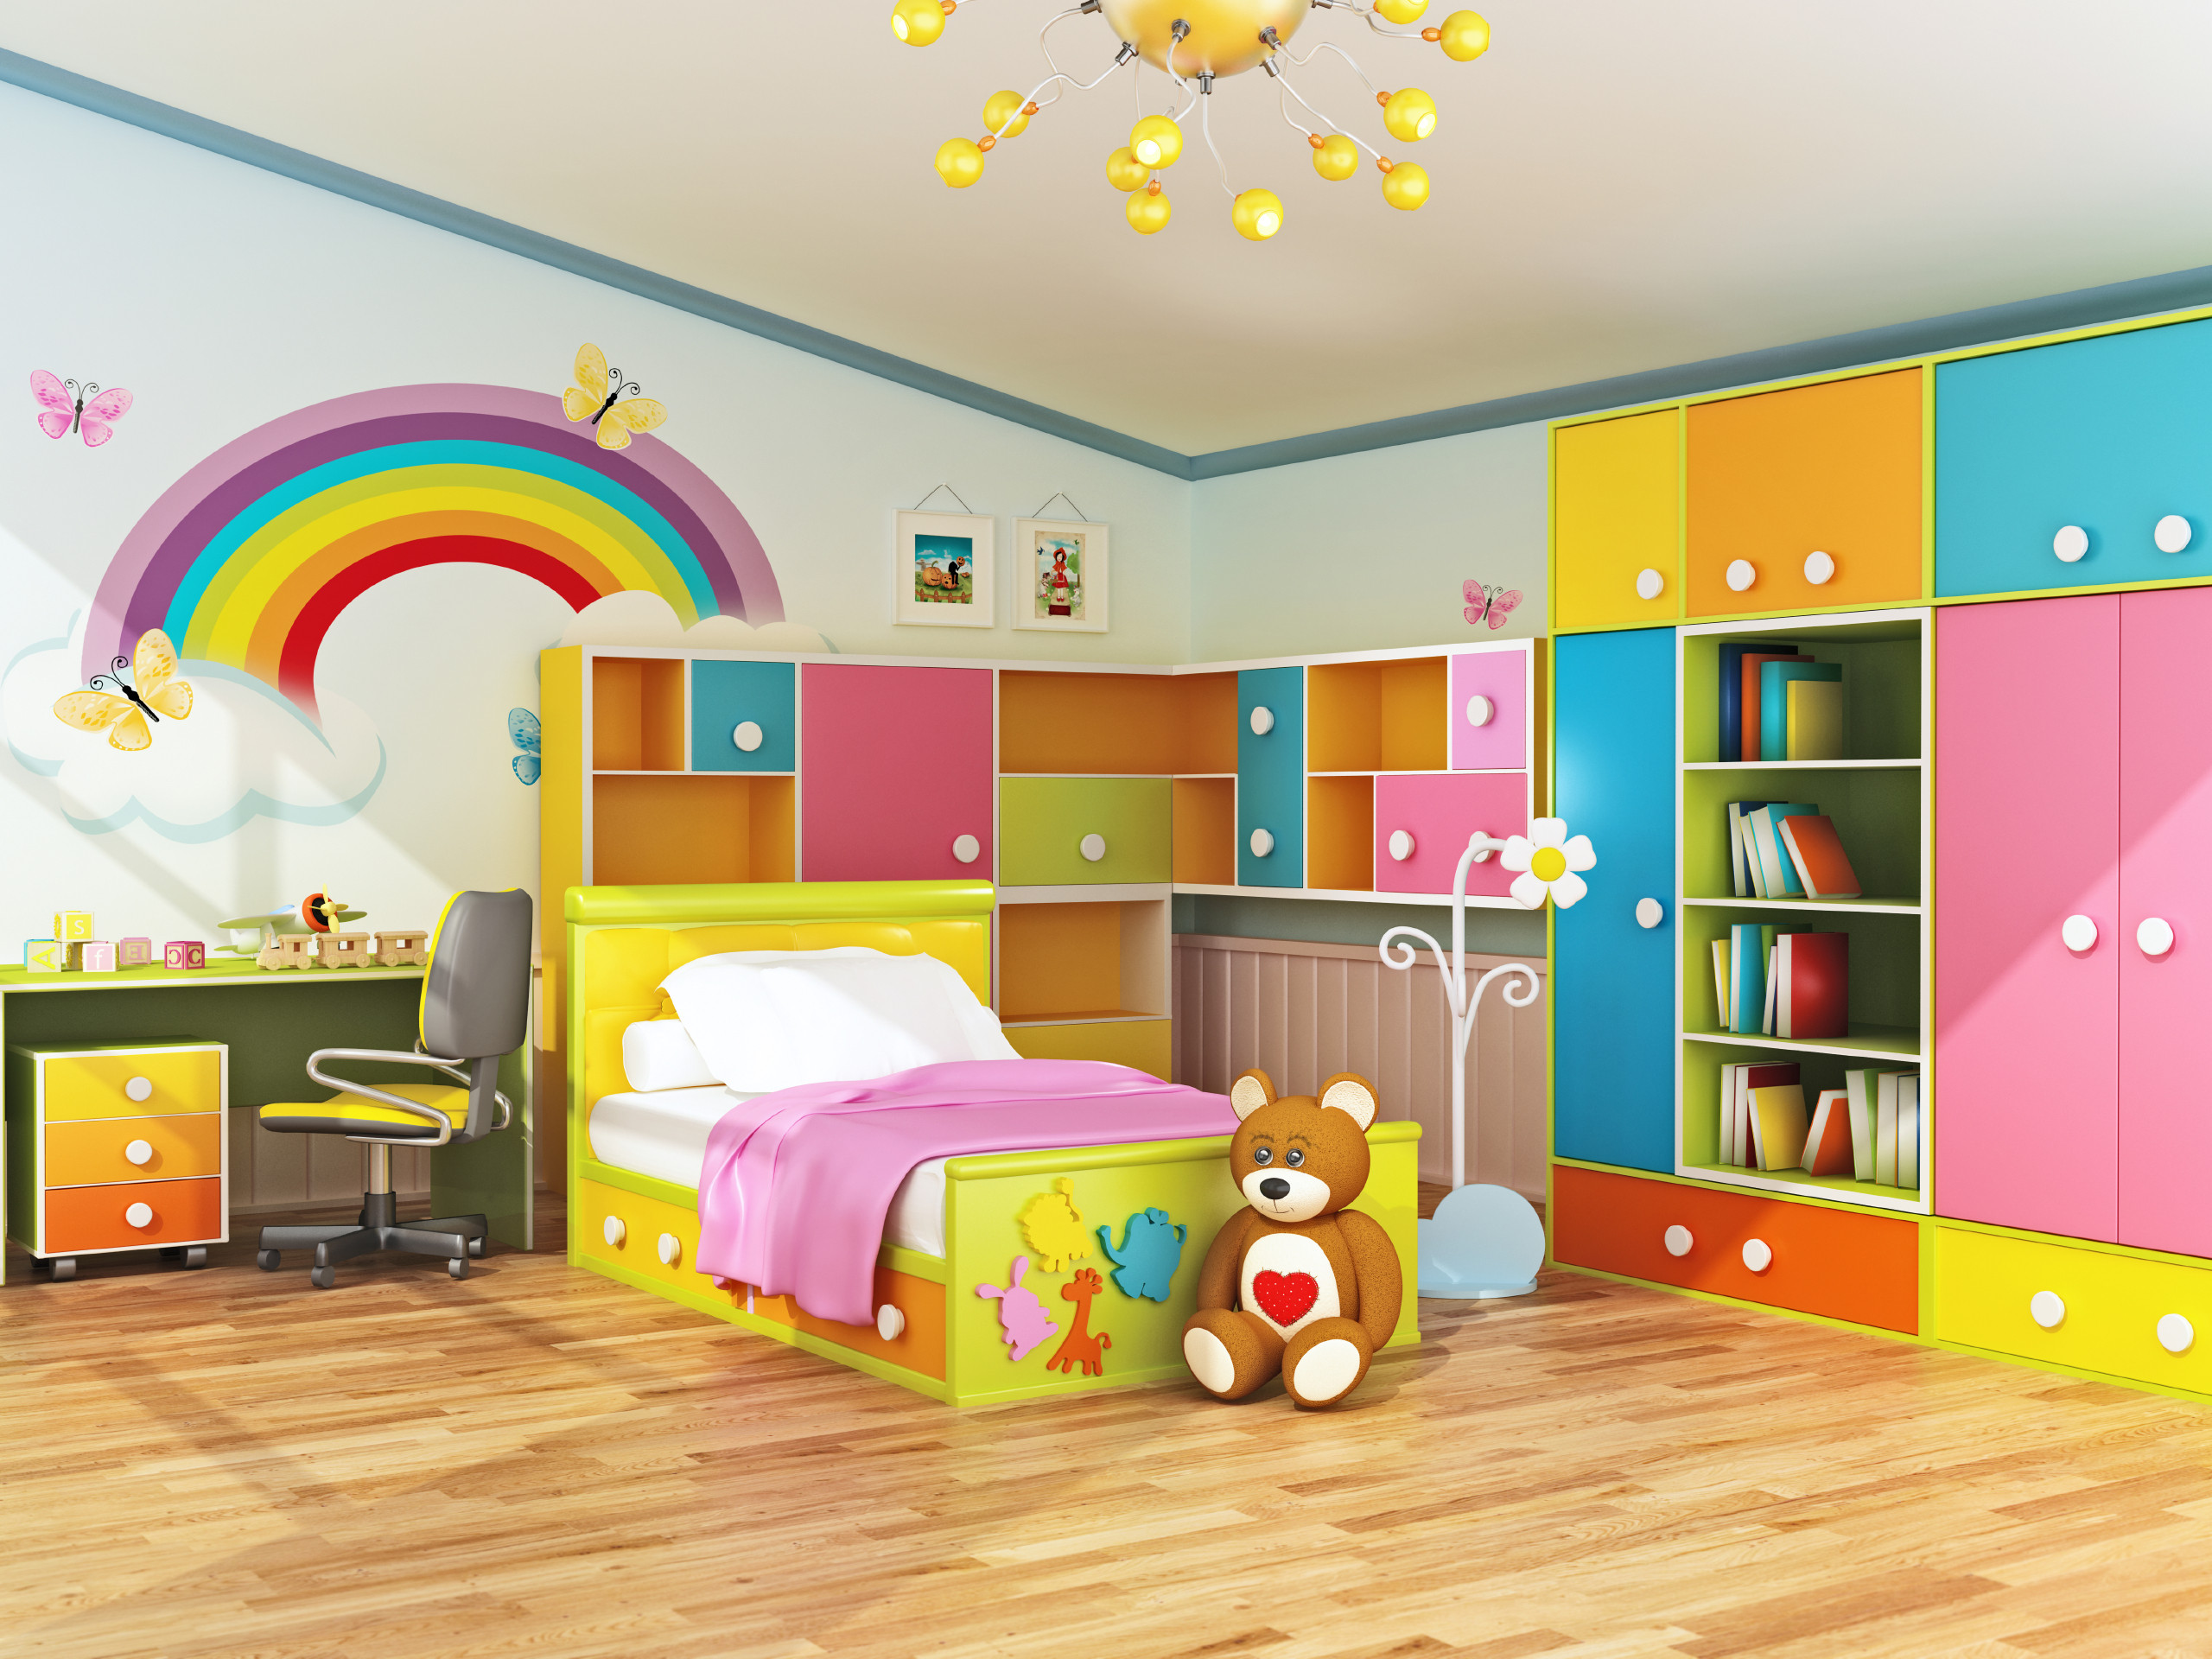 Kids Room Interior
 Plan Ahead When Decorating Kids Bedrooms